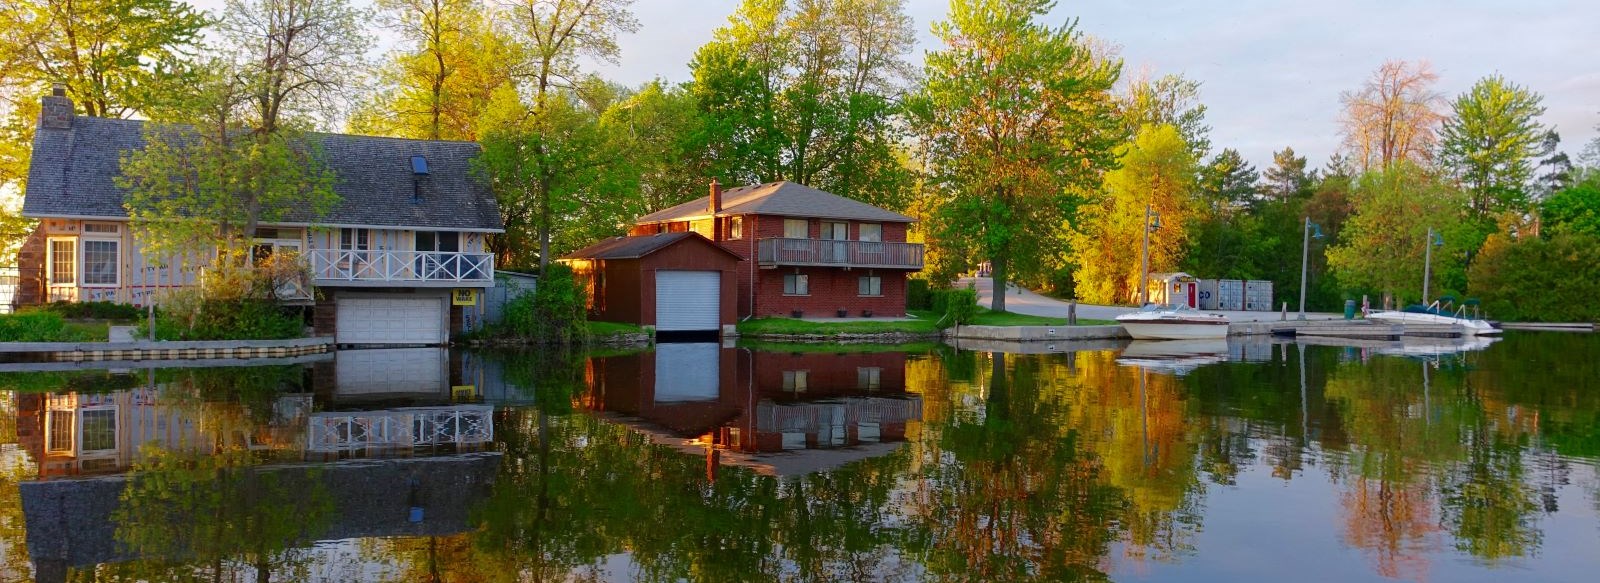 cottages on lake